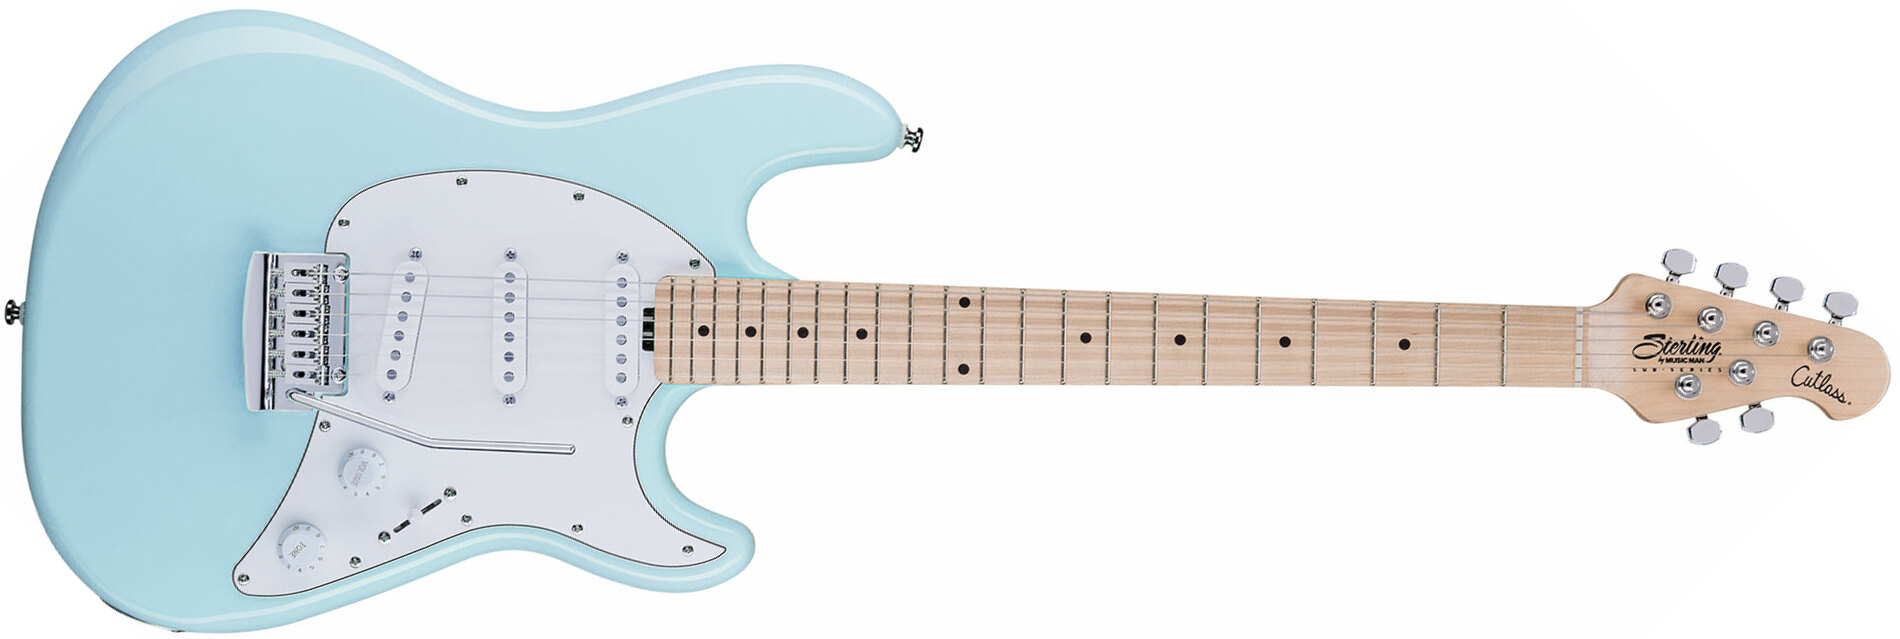 Sterling By Musicman Cutlass Ct30sss 3s Trem Mn - Daphne Blue - Str shape electric guitar - Main picture